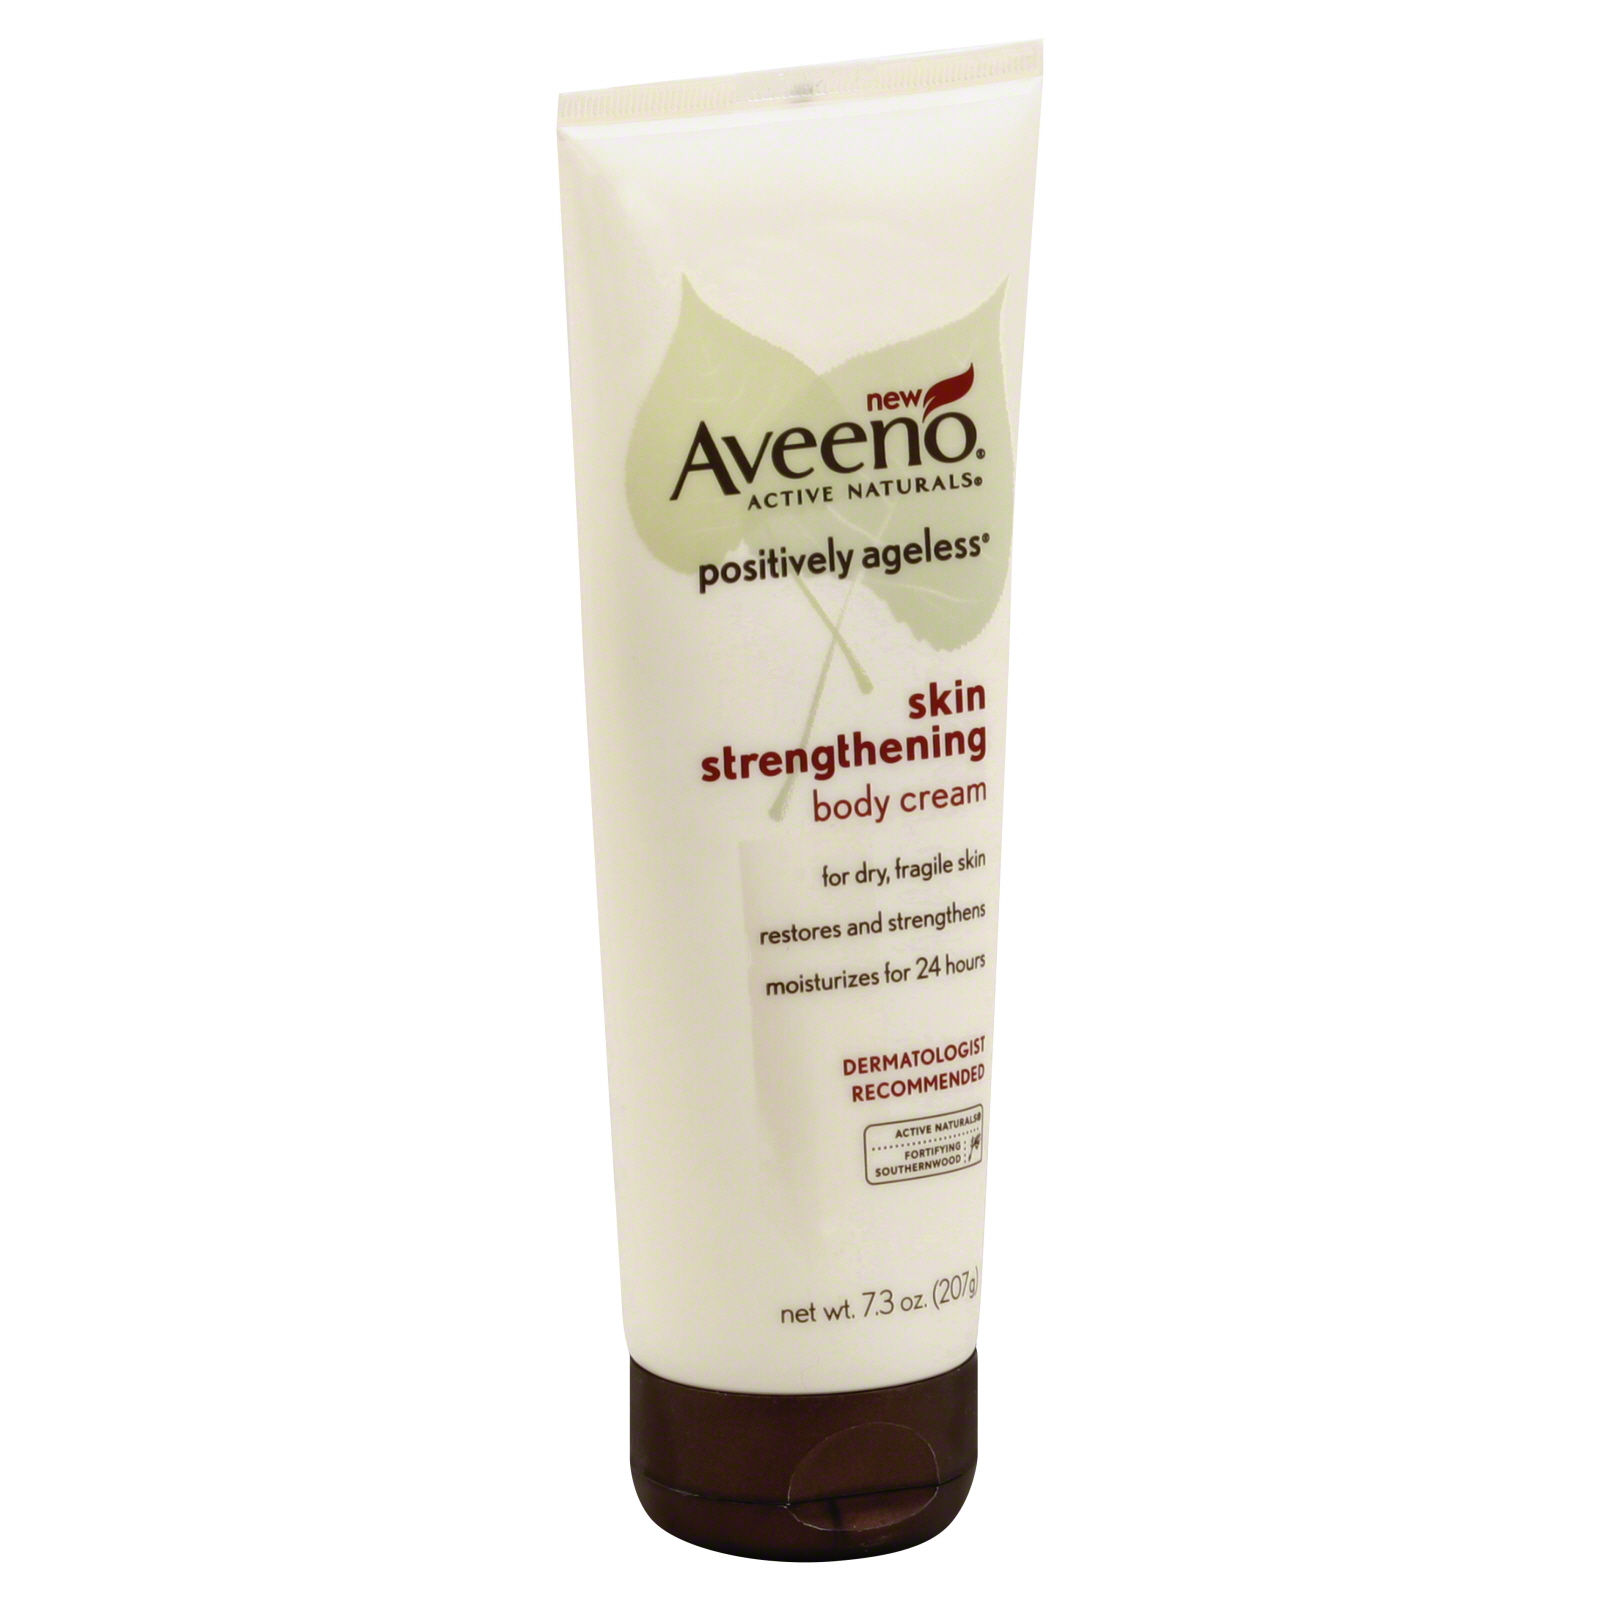 Aveeno Active Naturals Positively Ageless Body Cream, Skin Strengthening, 7.3 oz (207 g)